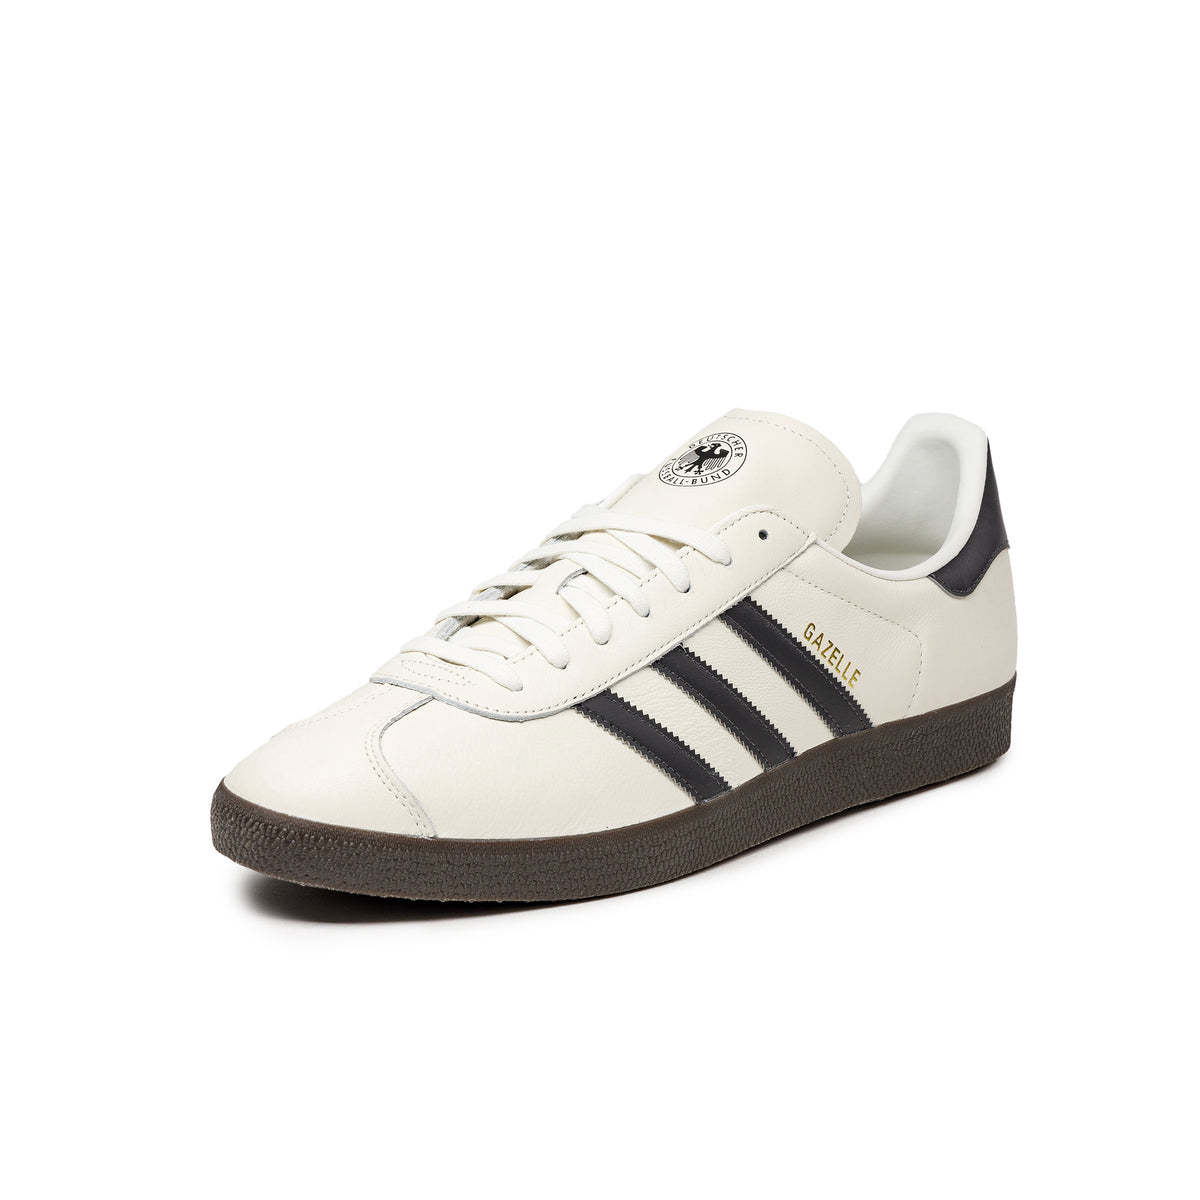 Adidas x DFB Gazelle » Buy online now!